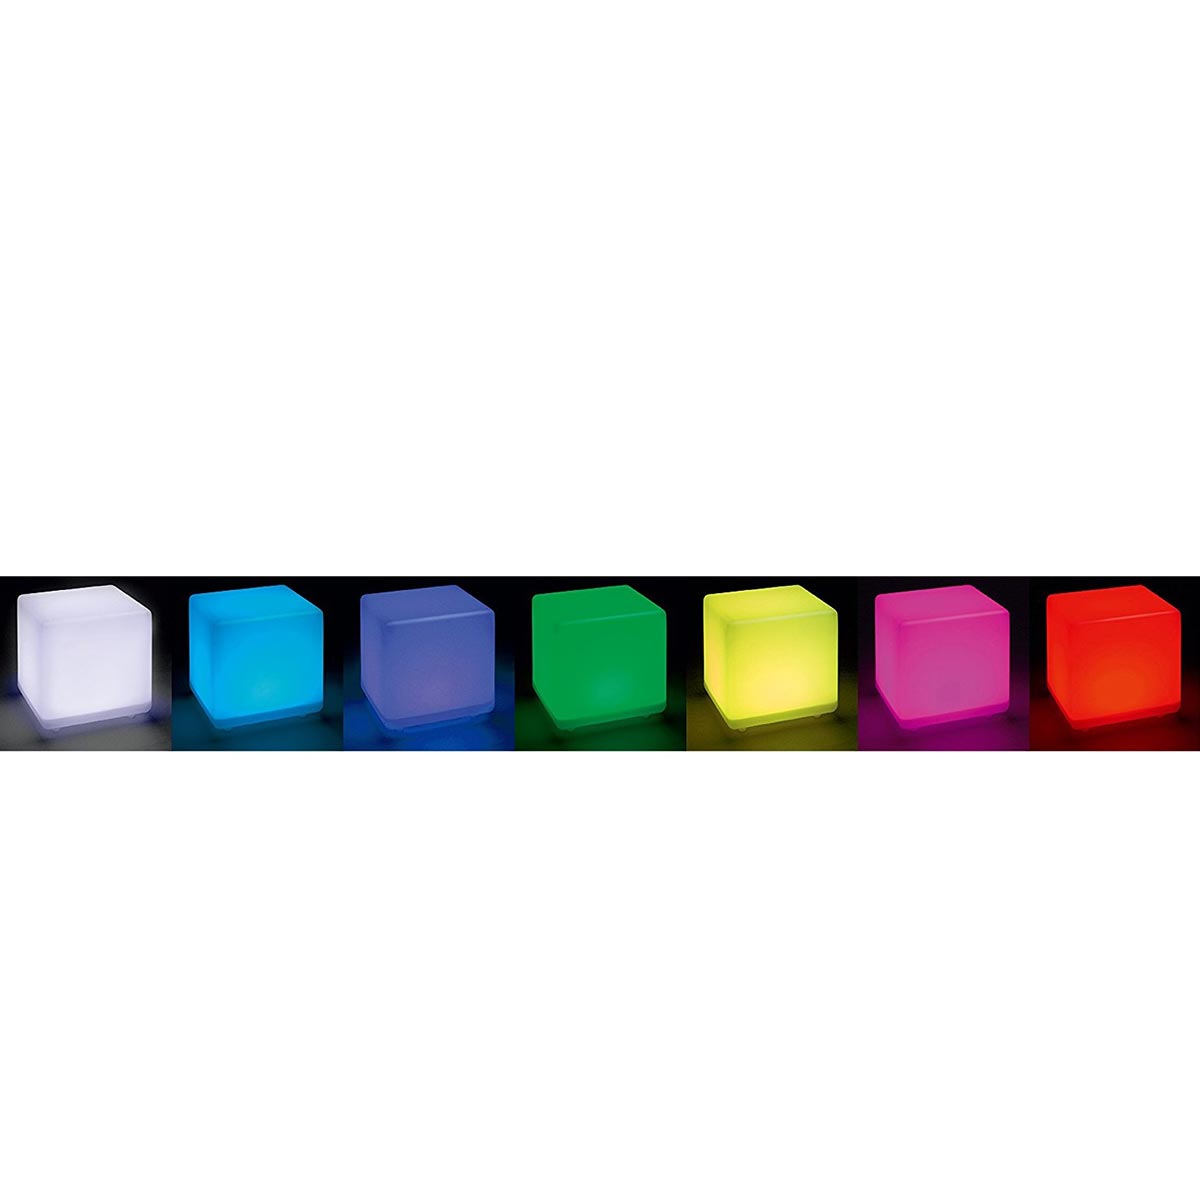 Cube solaire lumineux tabouret table basse LED blanc/multicolore CASY H30cm - REDDECO.com